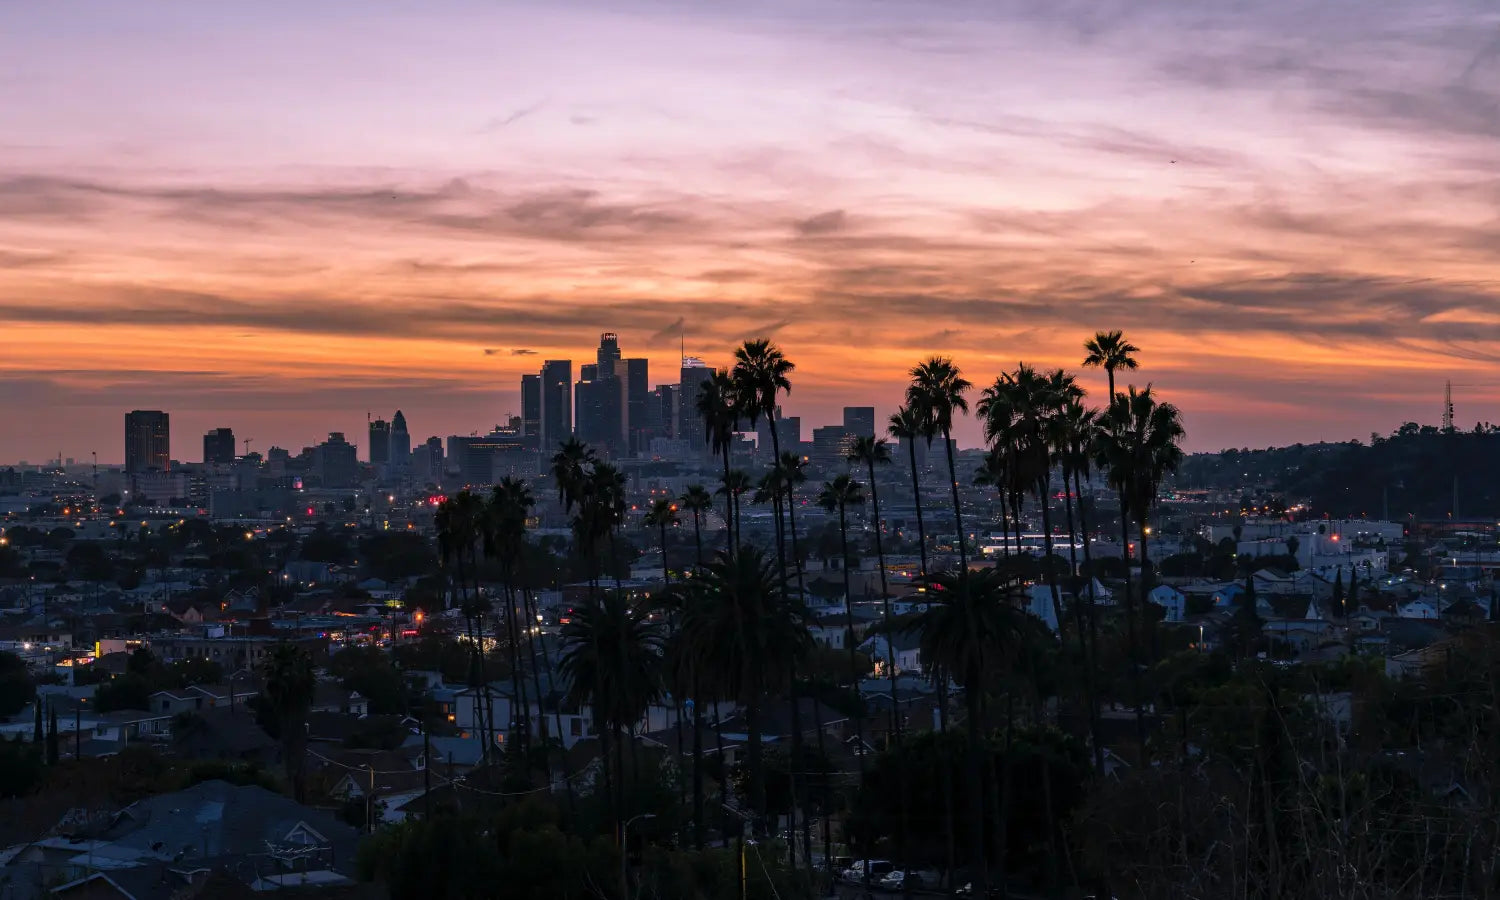 The skyline of Los Angeles